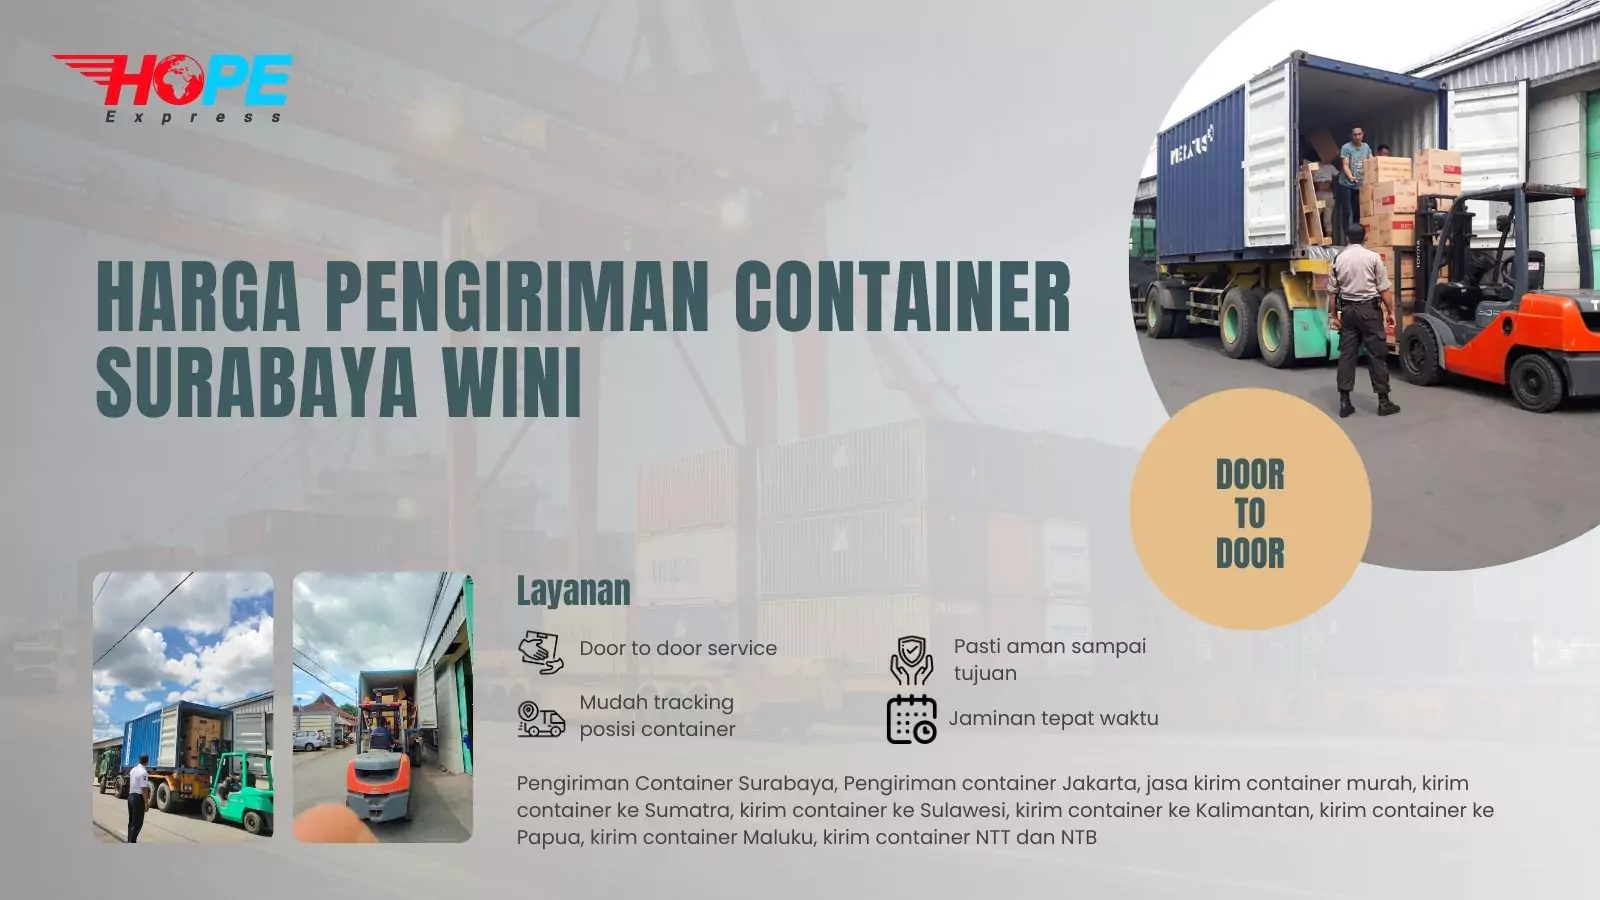 Harga Pengiriman Container Surabaya Wini